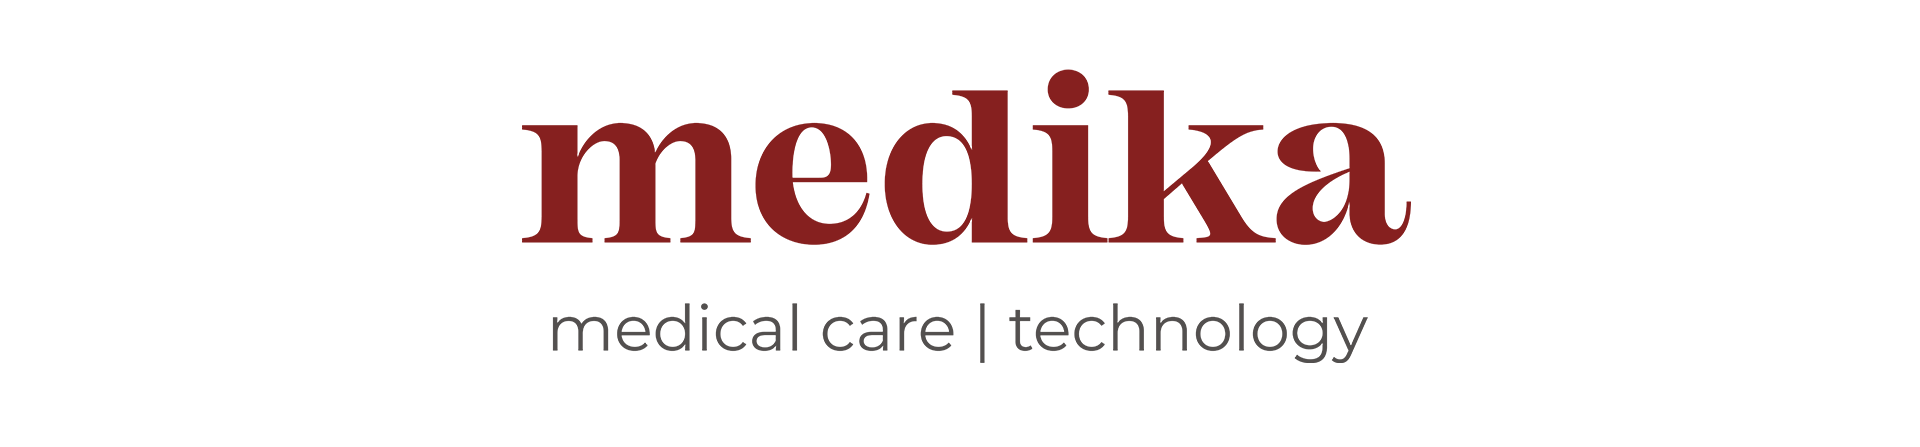 medika_medizintechnik_logo